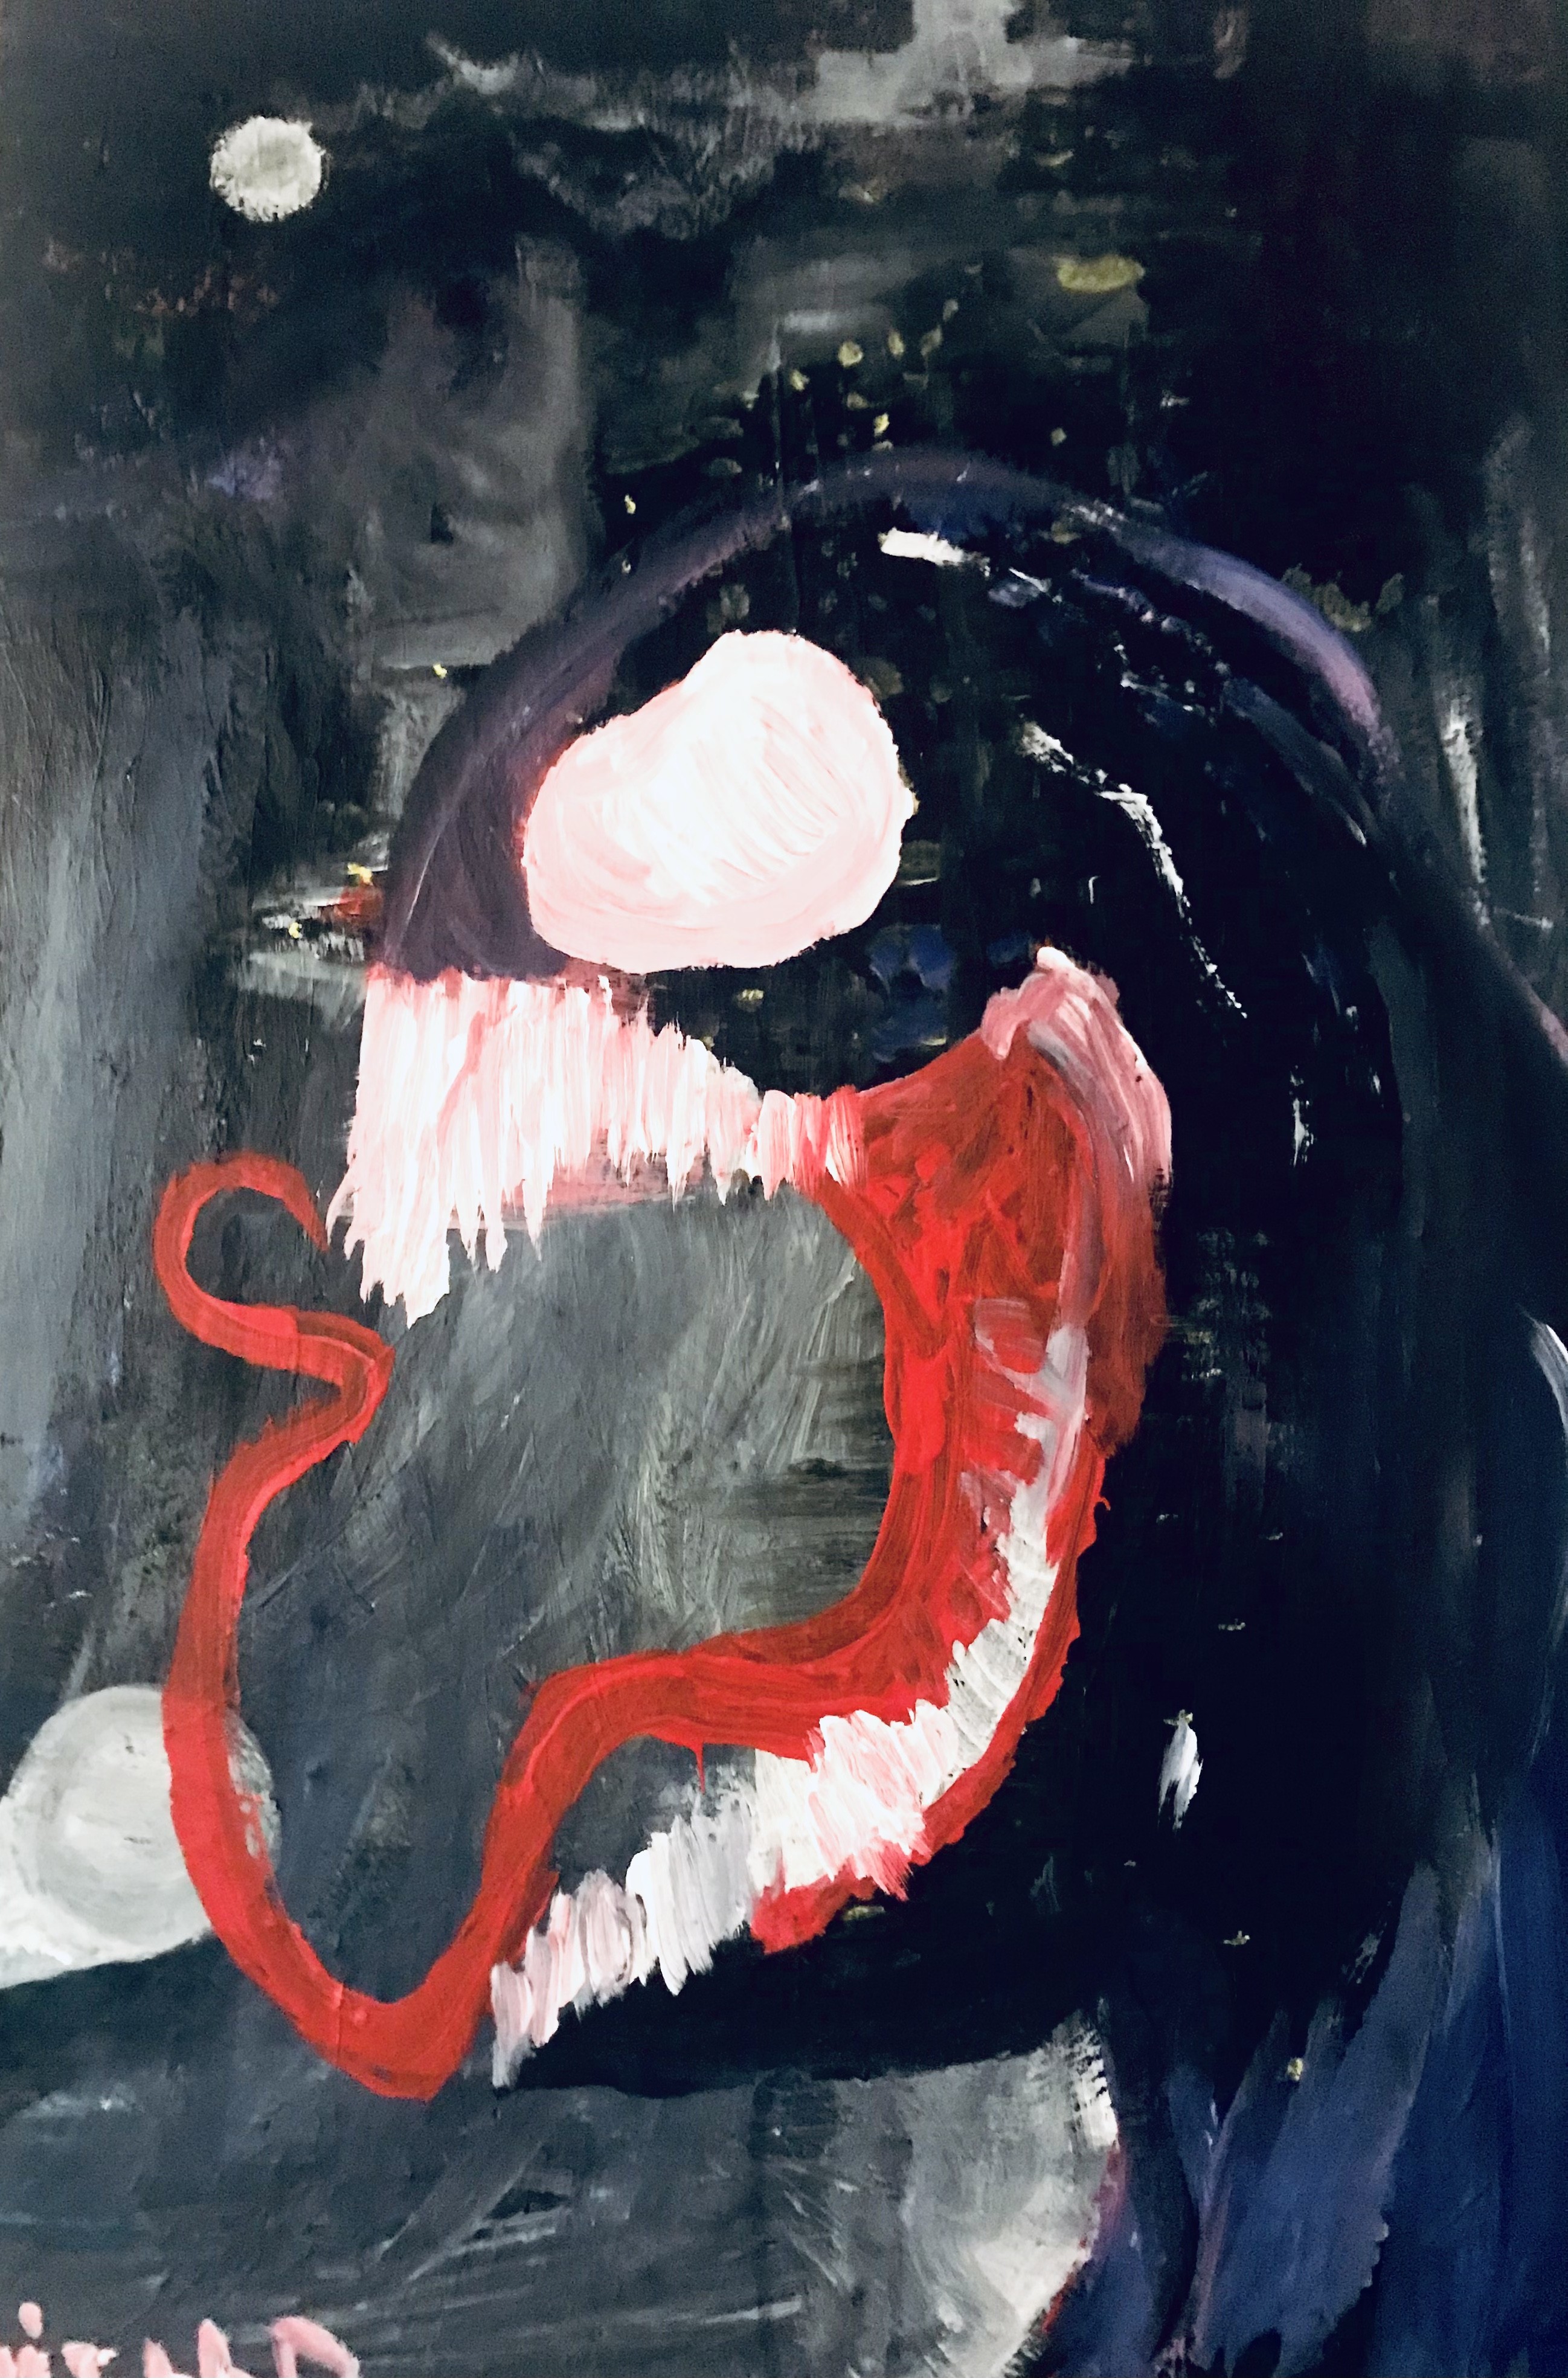 Venom acrylic painting